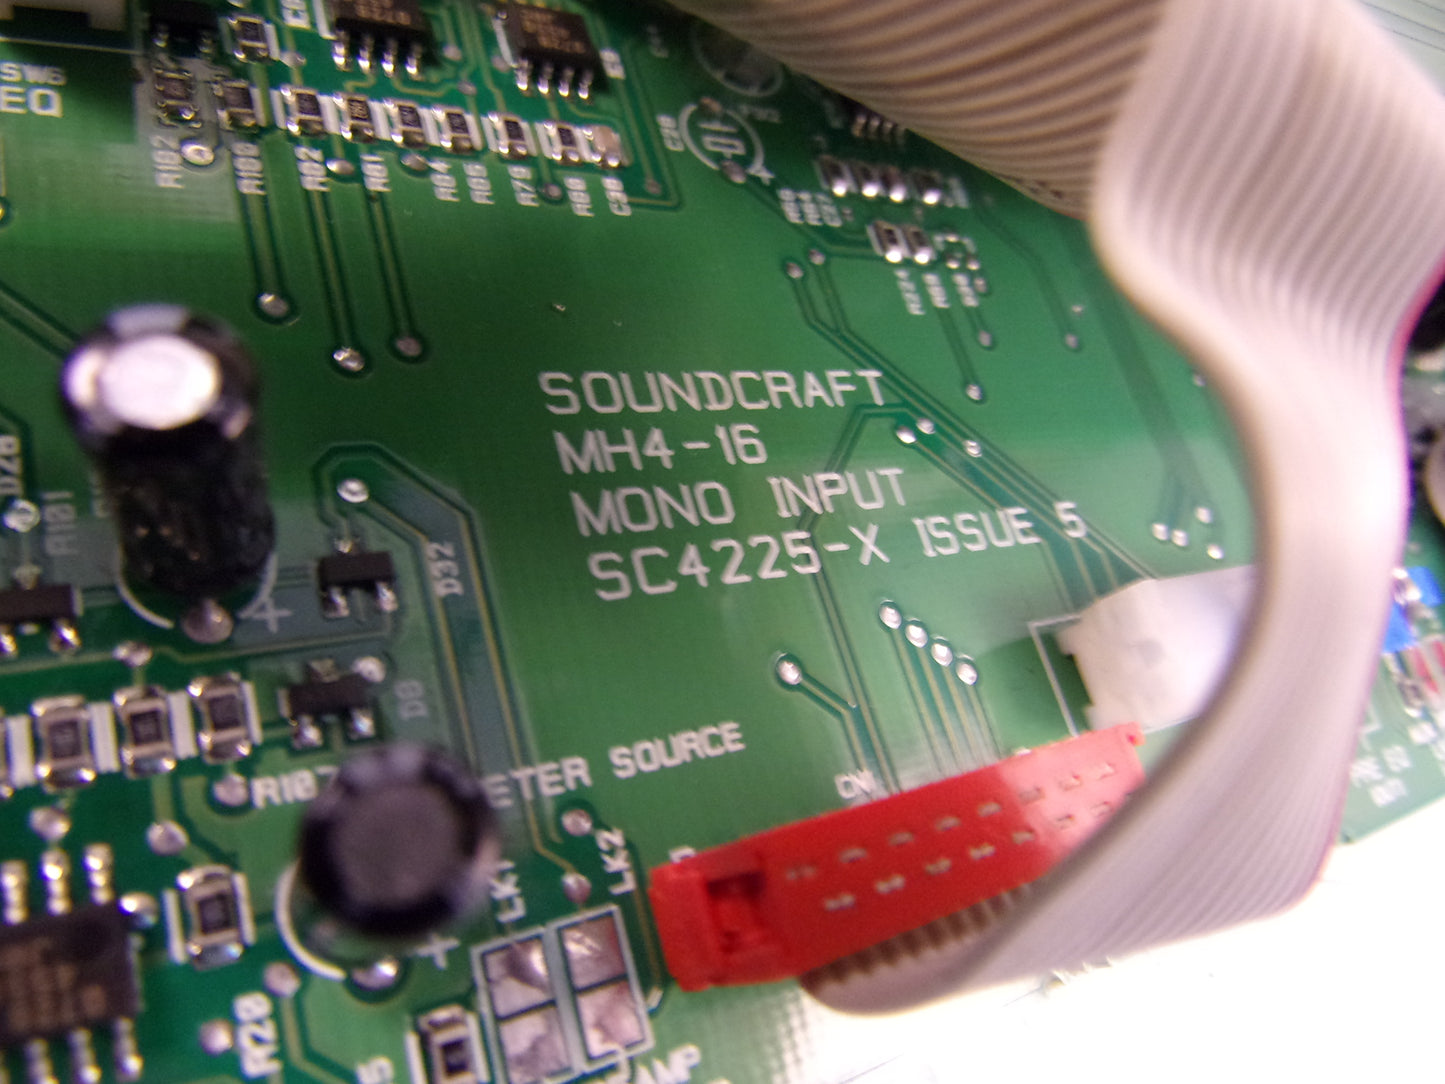 Soundcraft MH4 Mono input SC4225-X ISSUE 5